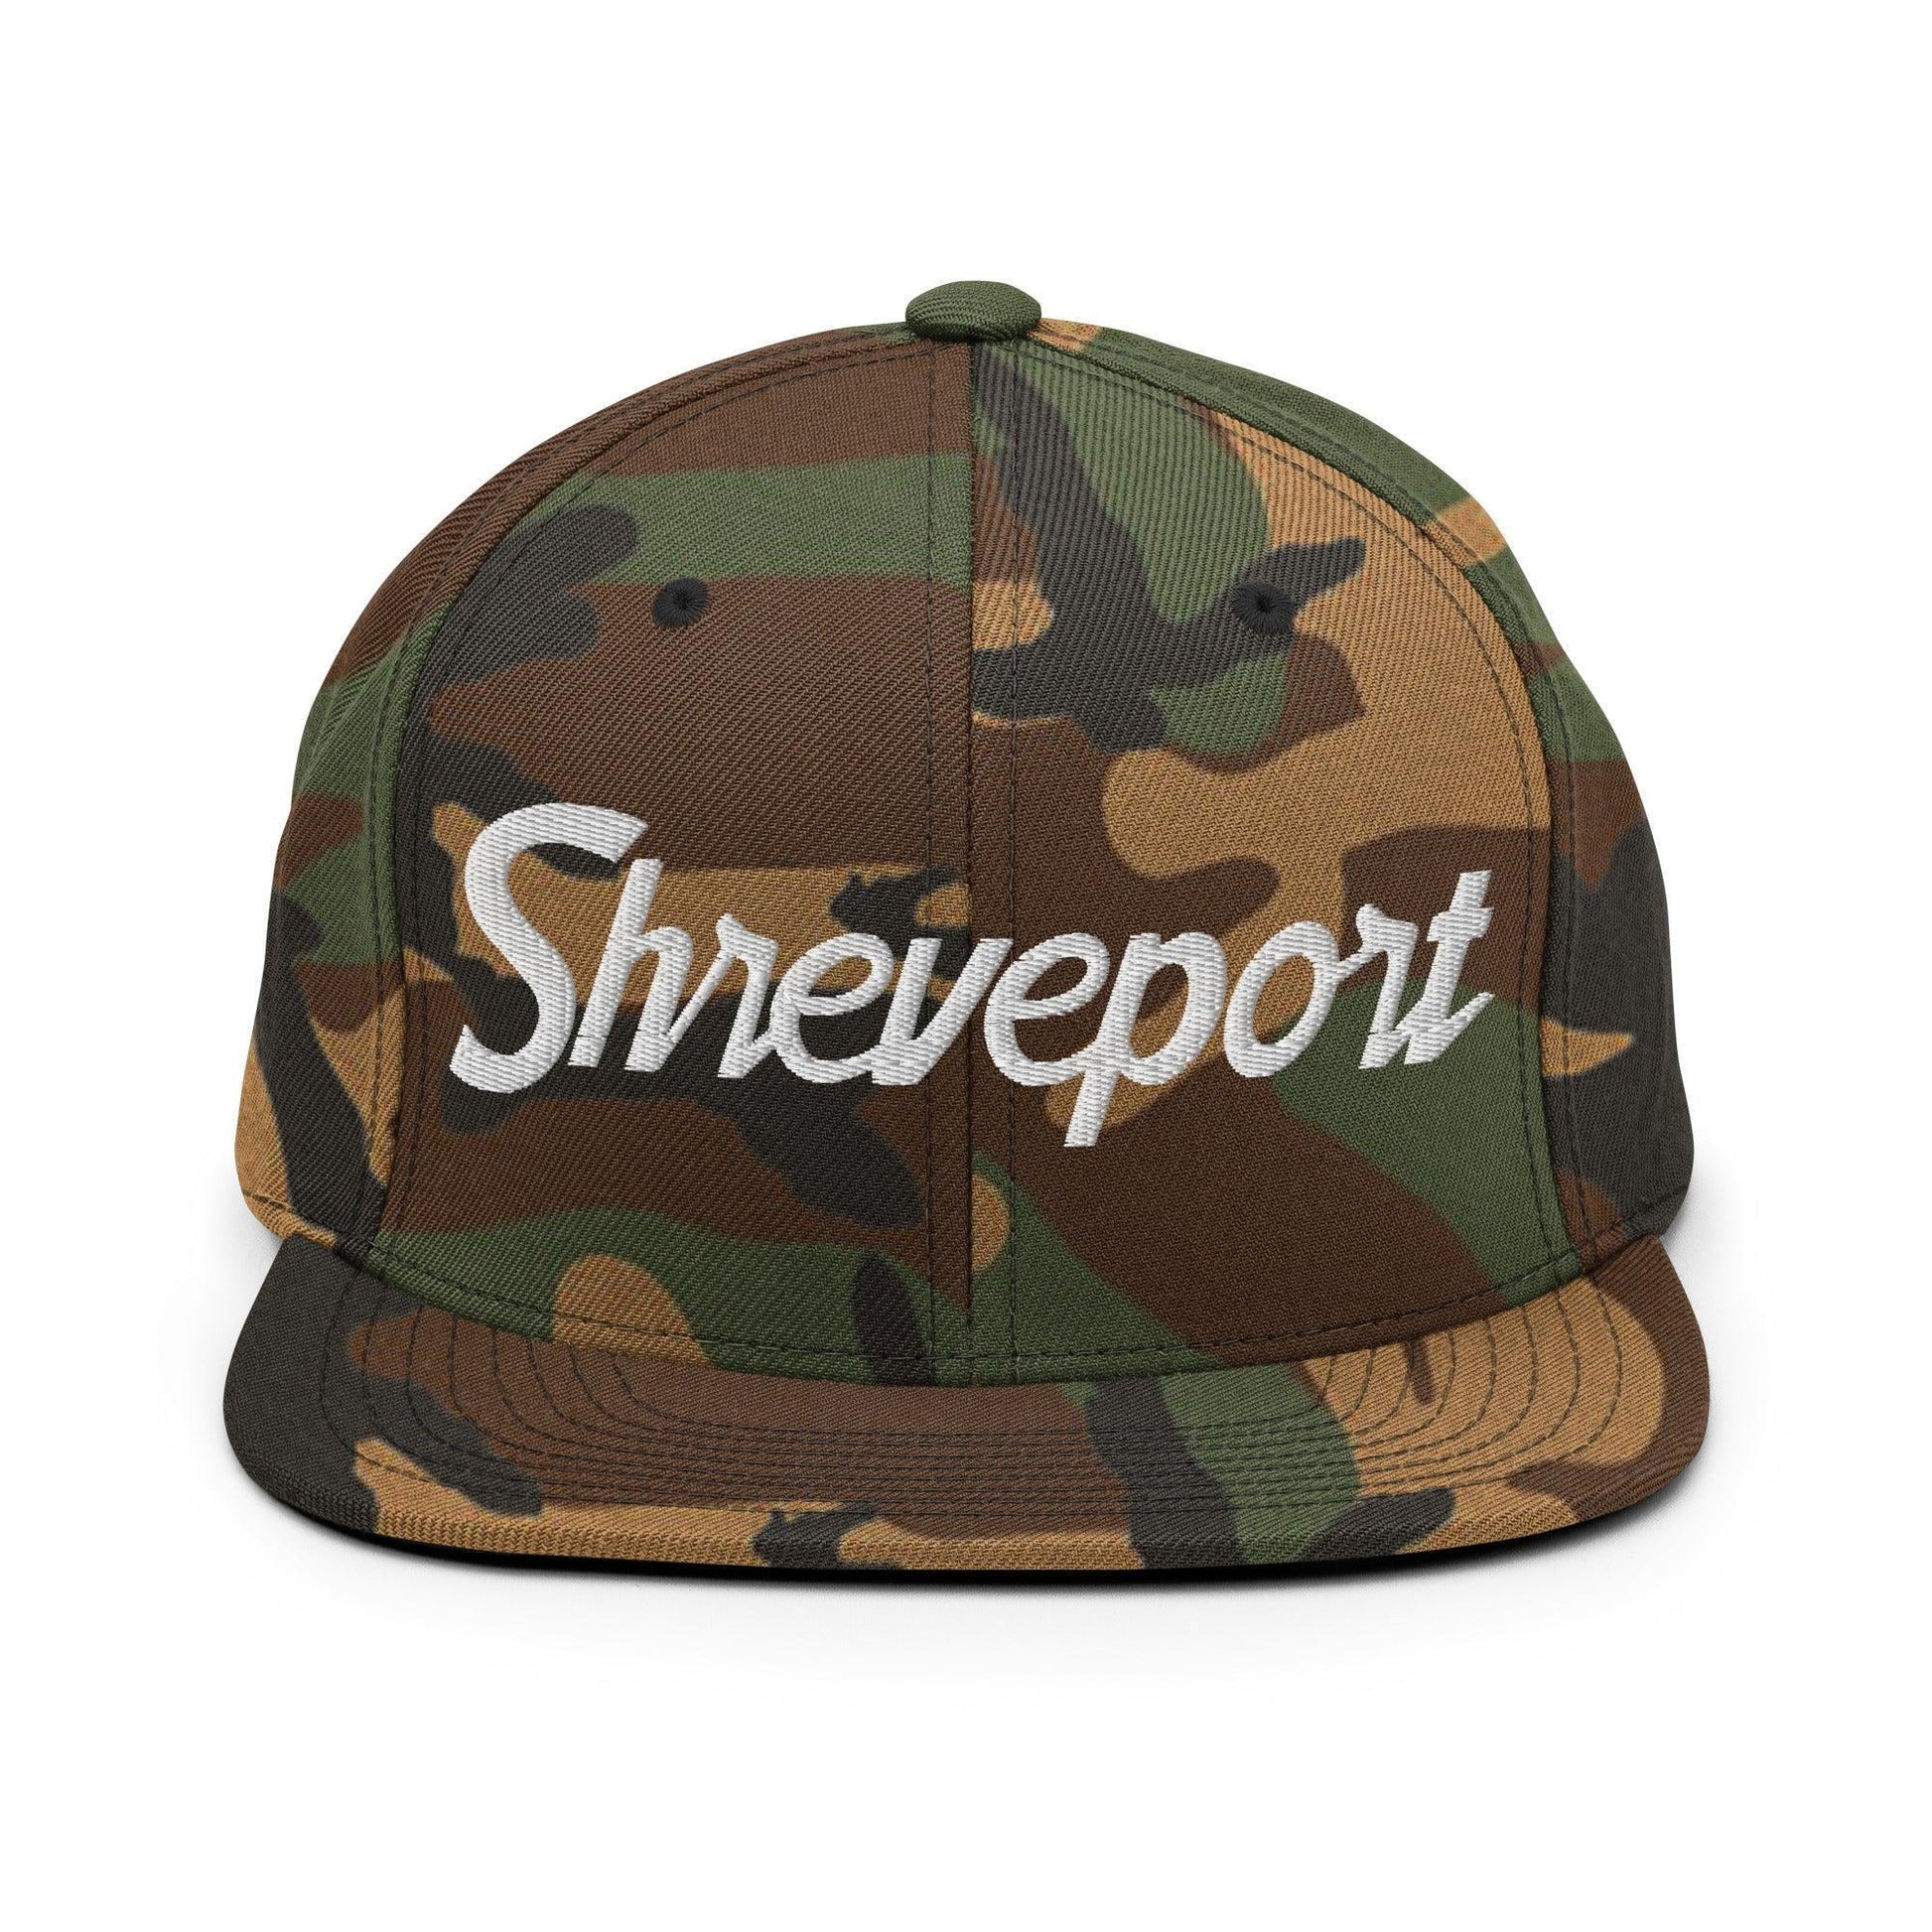 Shreveport Script Snapback Hat Green Camo